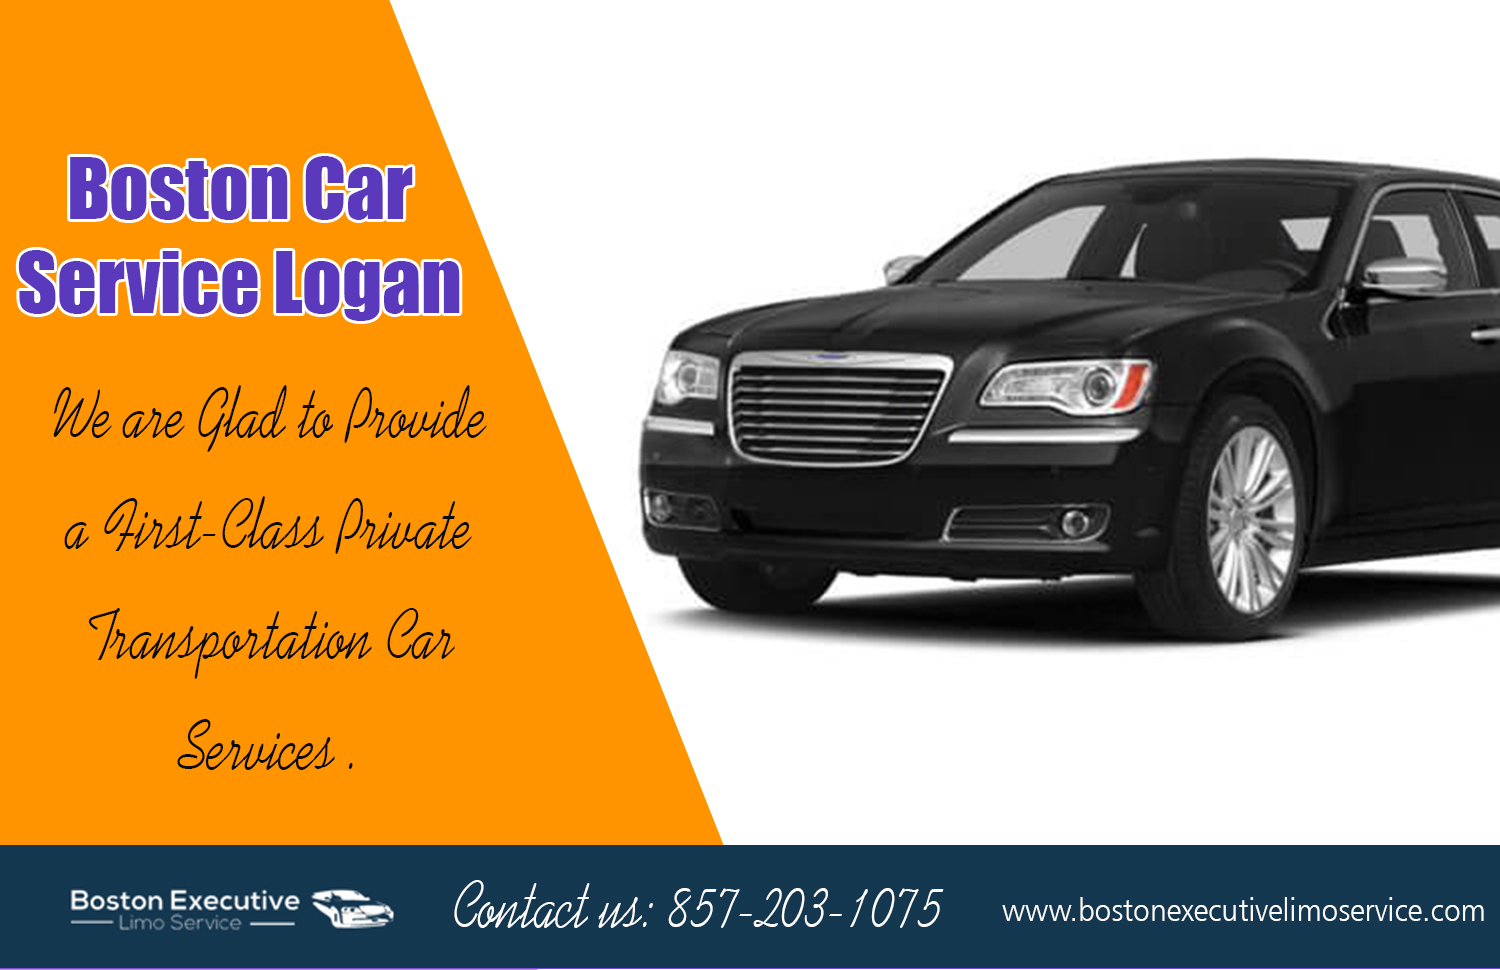 Car Service Logan Boston | 857-203-1075 | bostonexecutivelimoservice.com